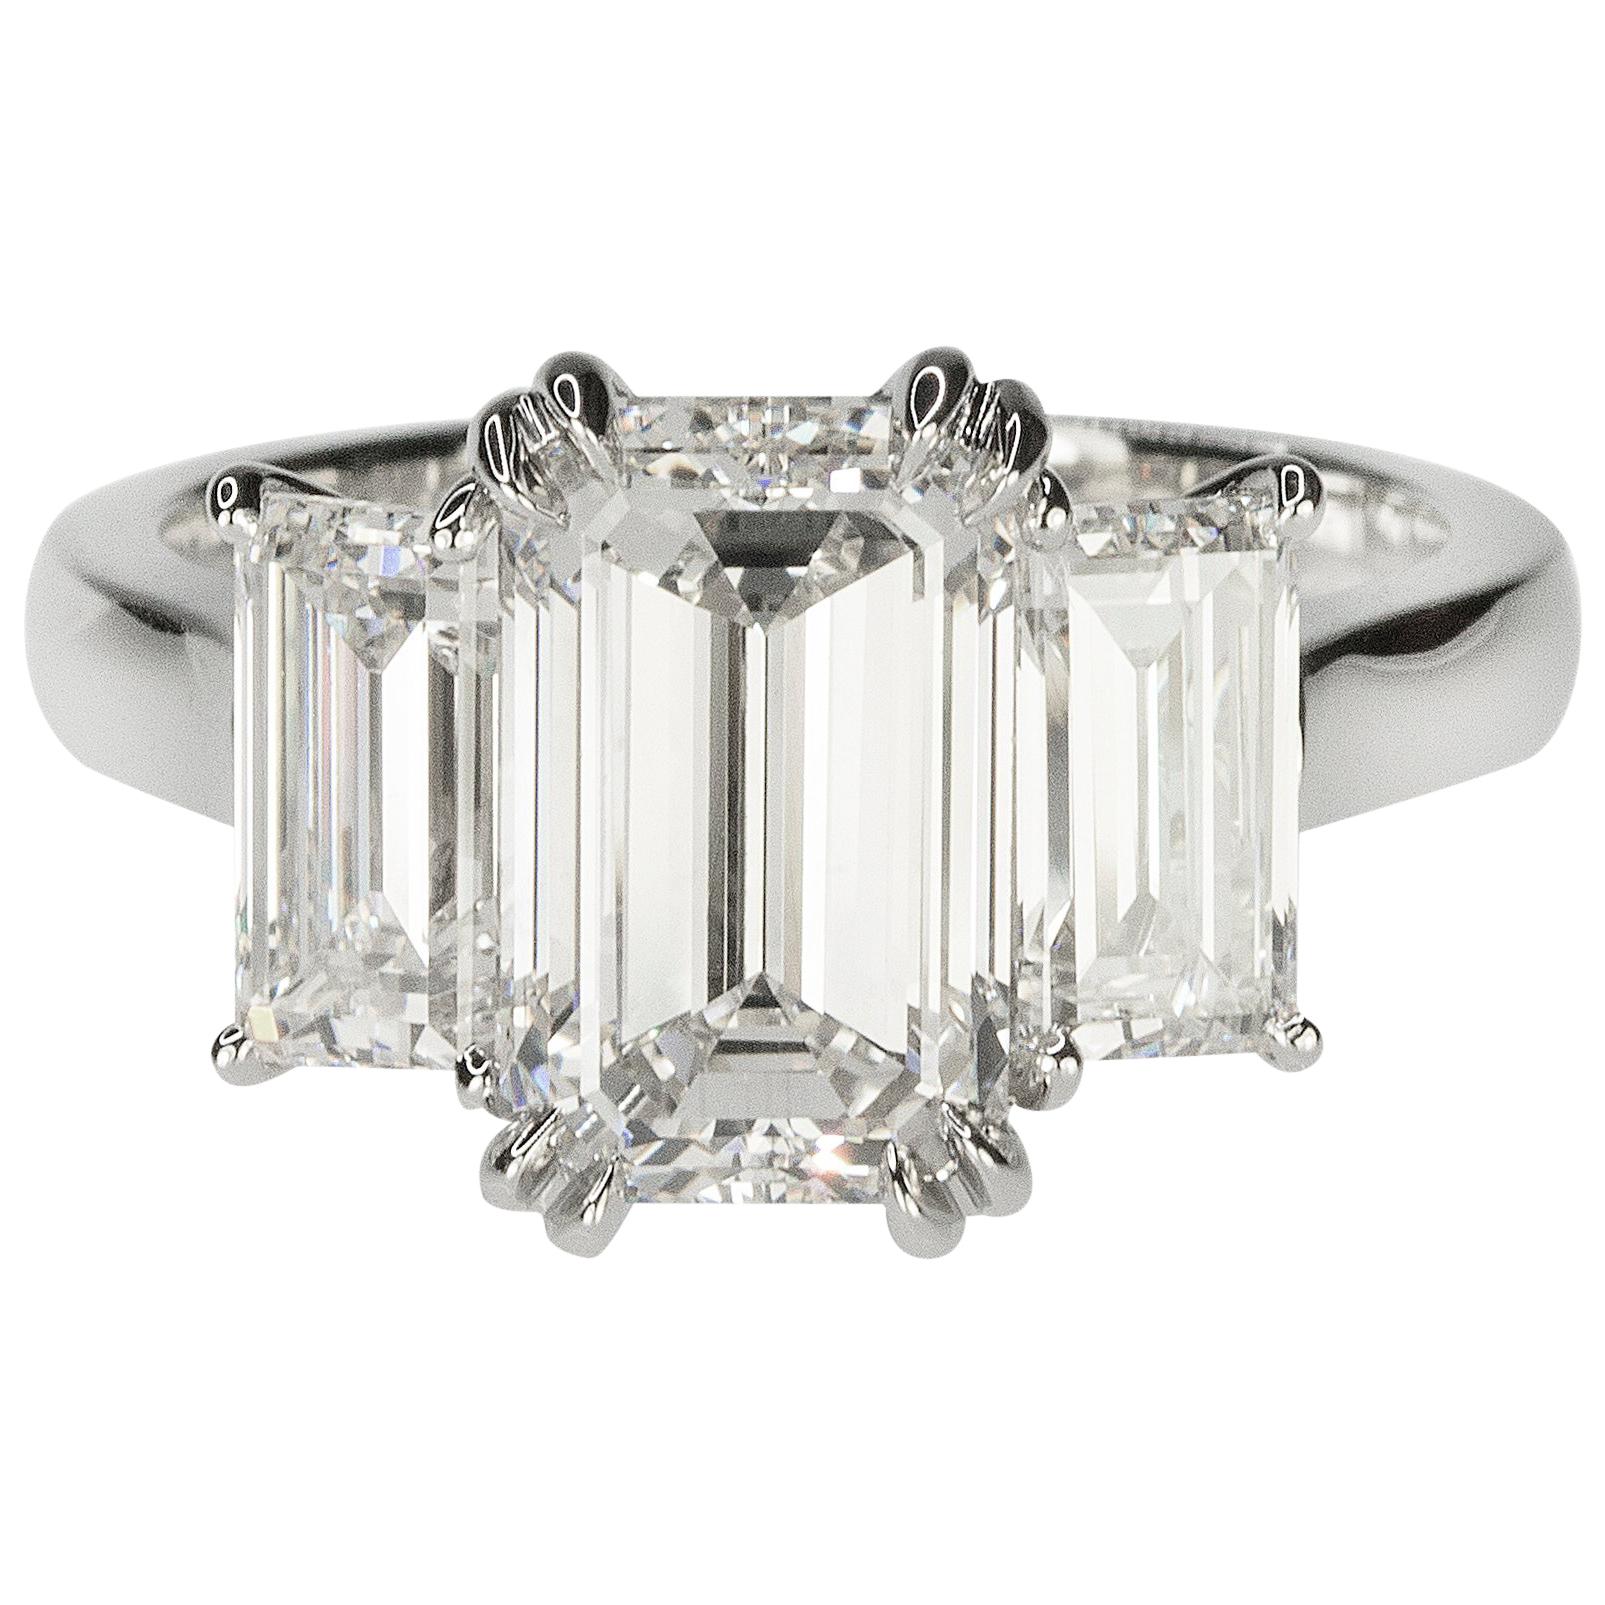 Stunning Platinum Three Emerald Cut Diamond Ring